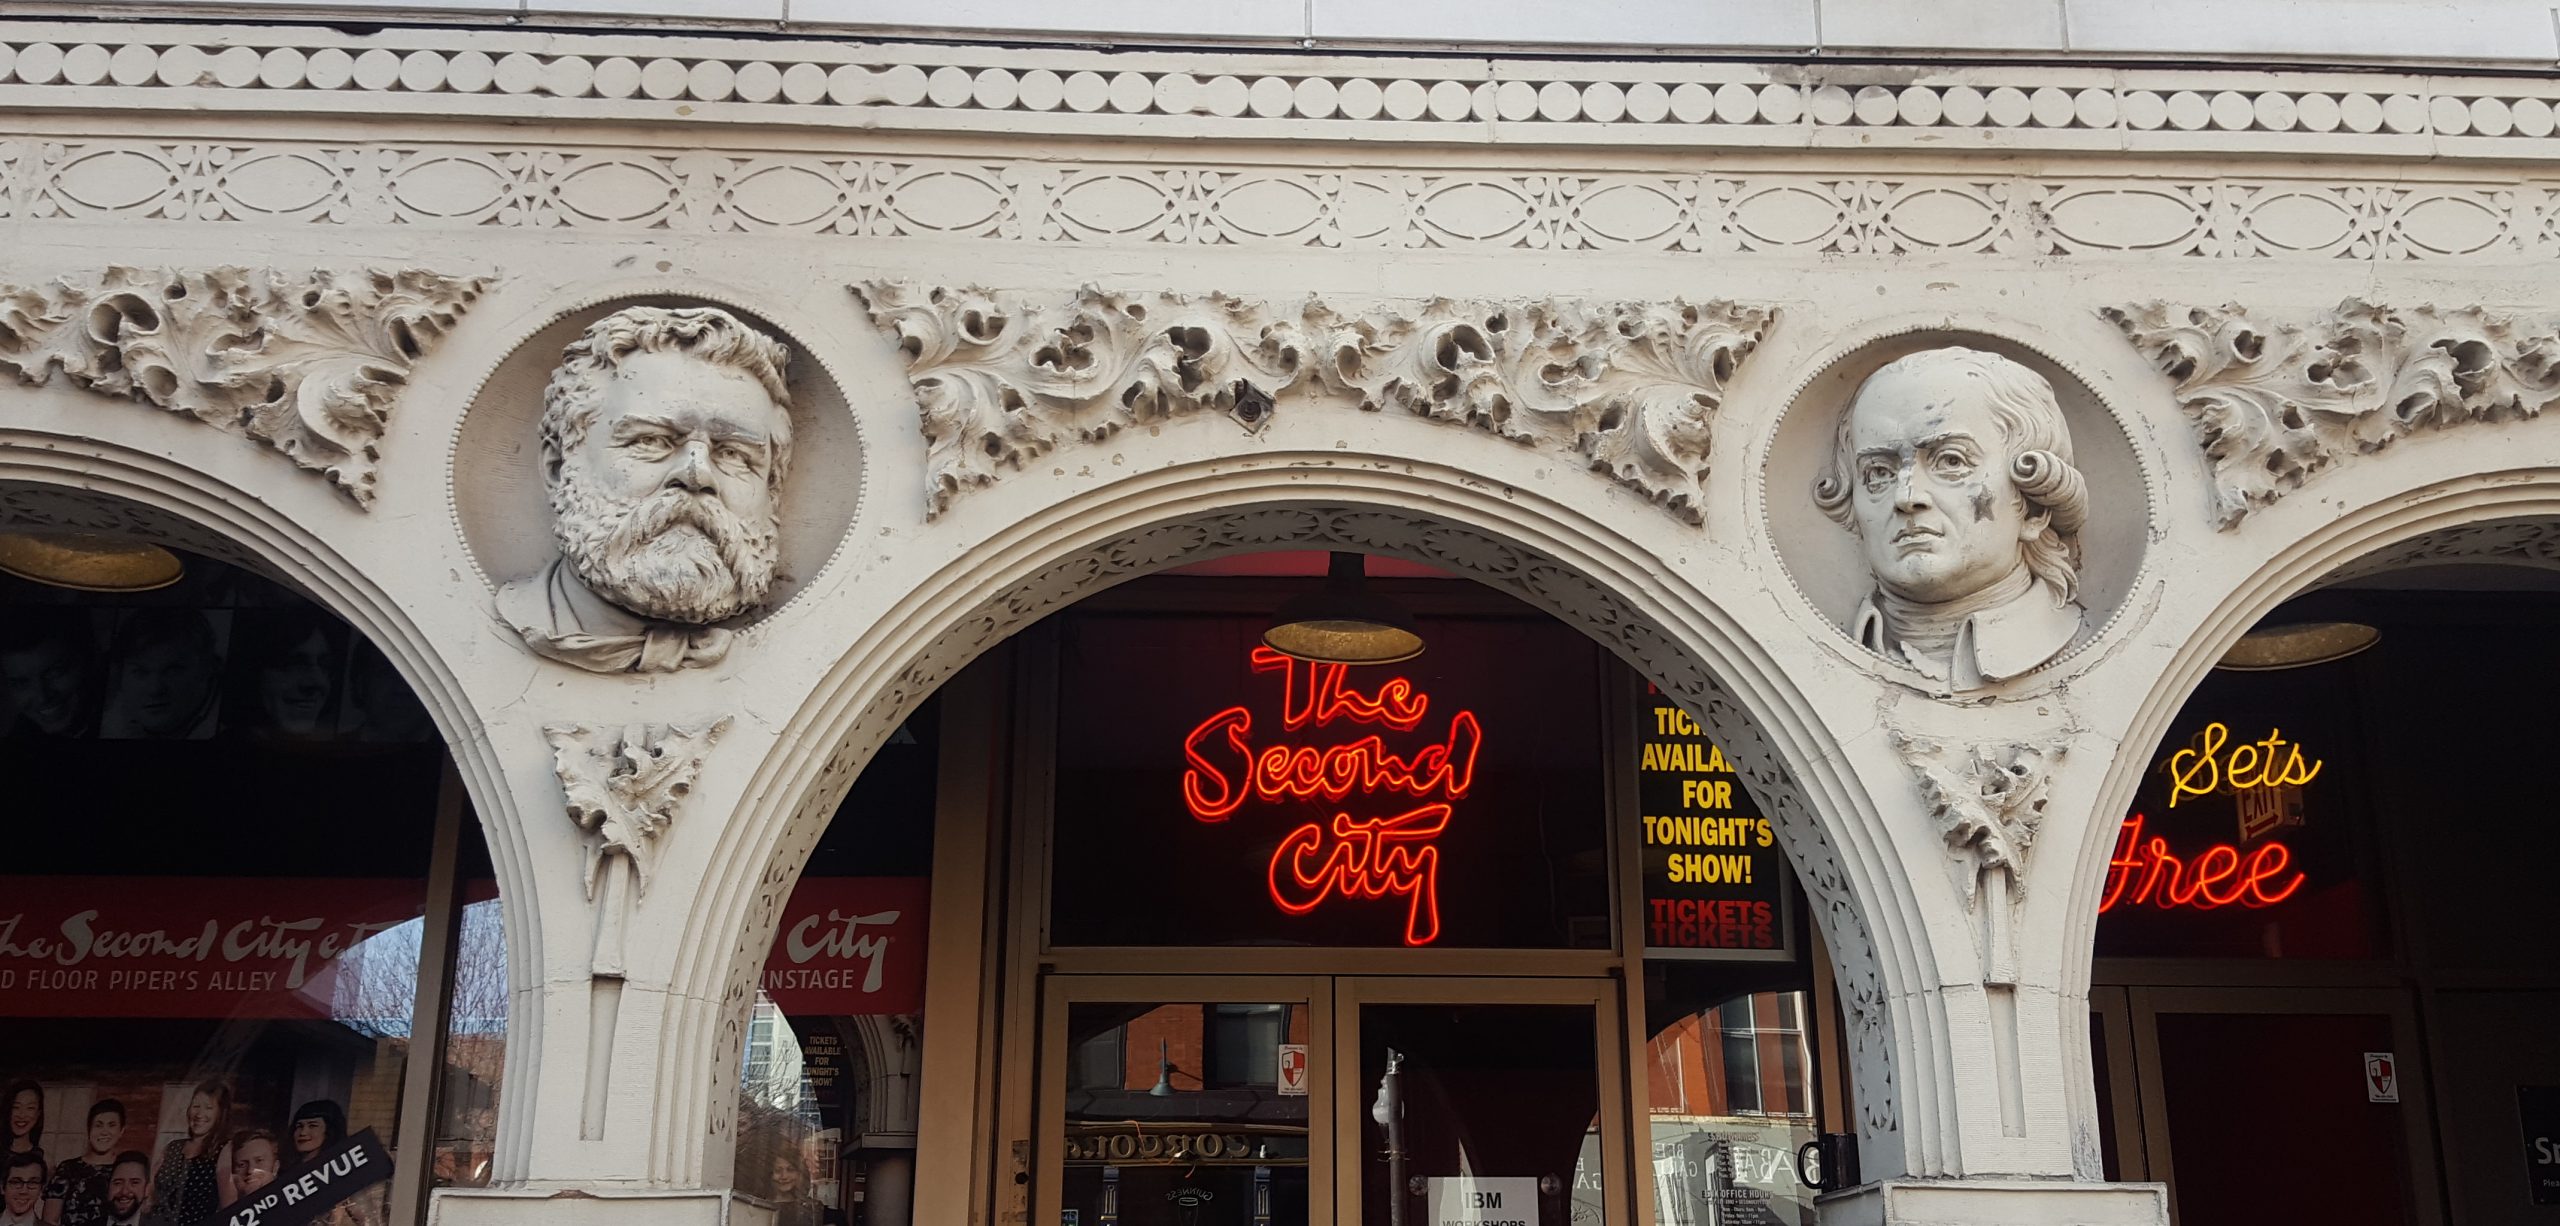 Second City facade SNL Chicago Tour Louis Sullian Garrick Theater